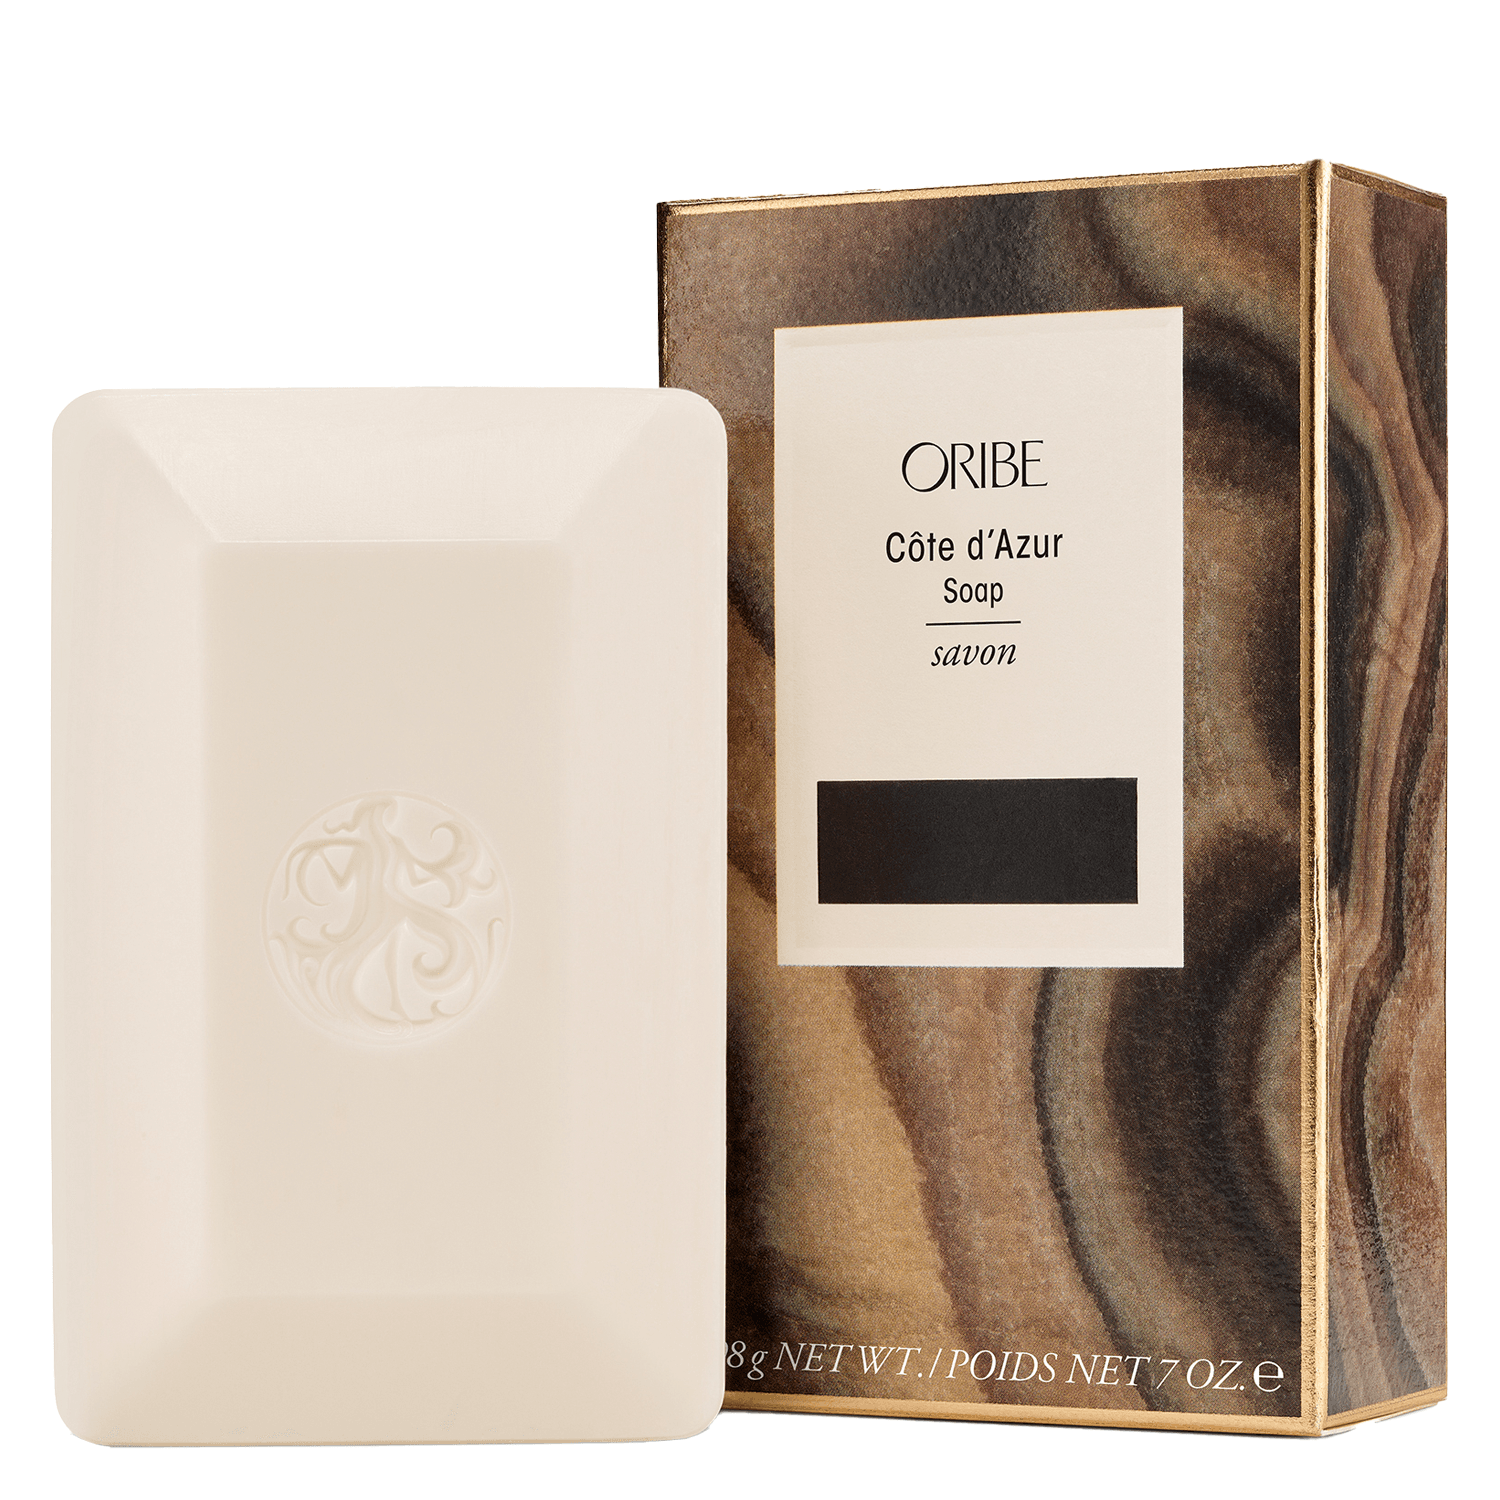 Oribe Skin - Côte d'Azur Bar Soap